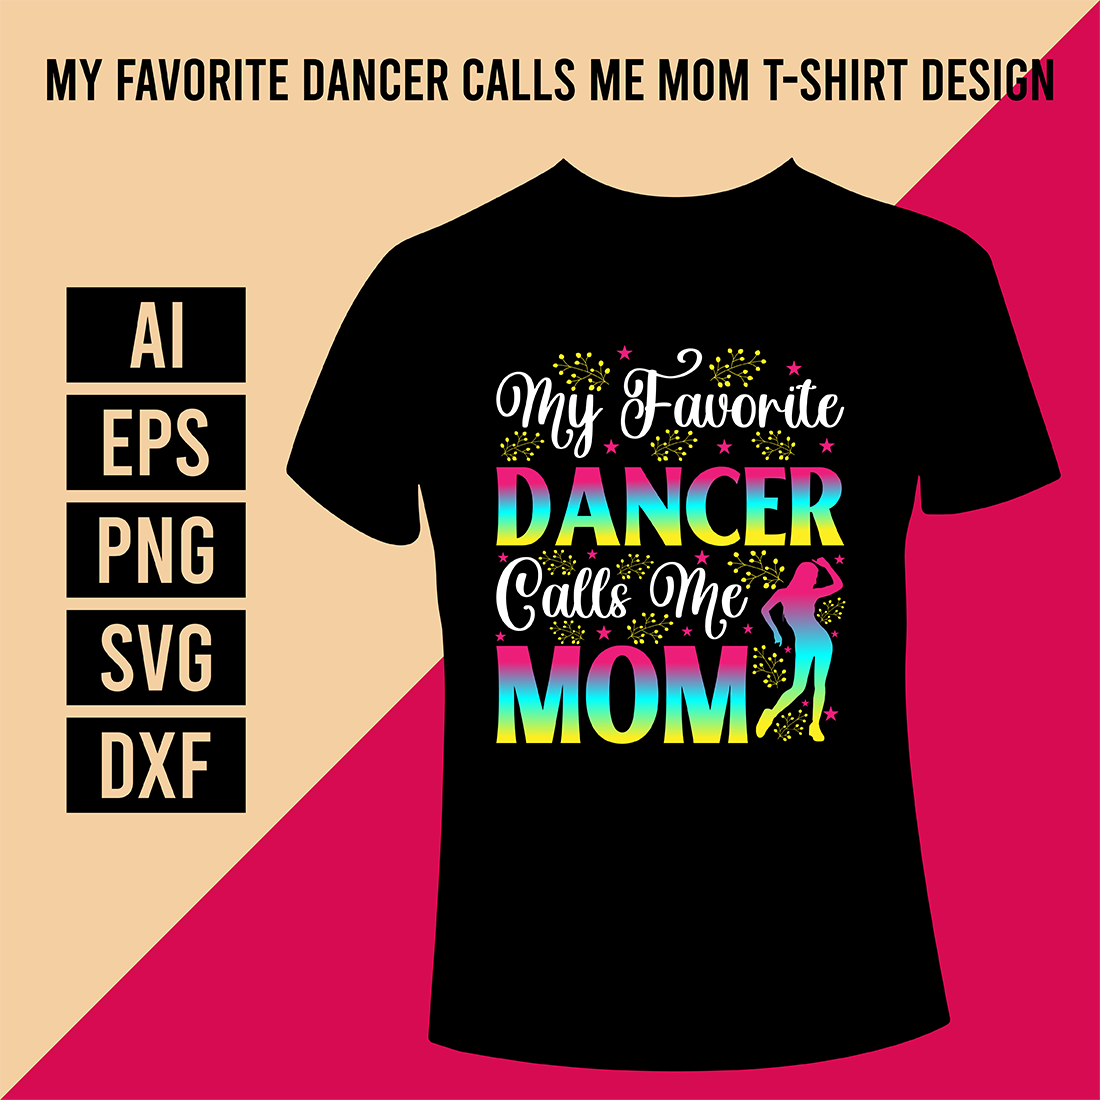 My Favorite Dancer Calls Me Mom T-Shirt Design cover image.